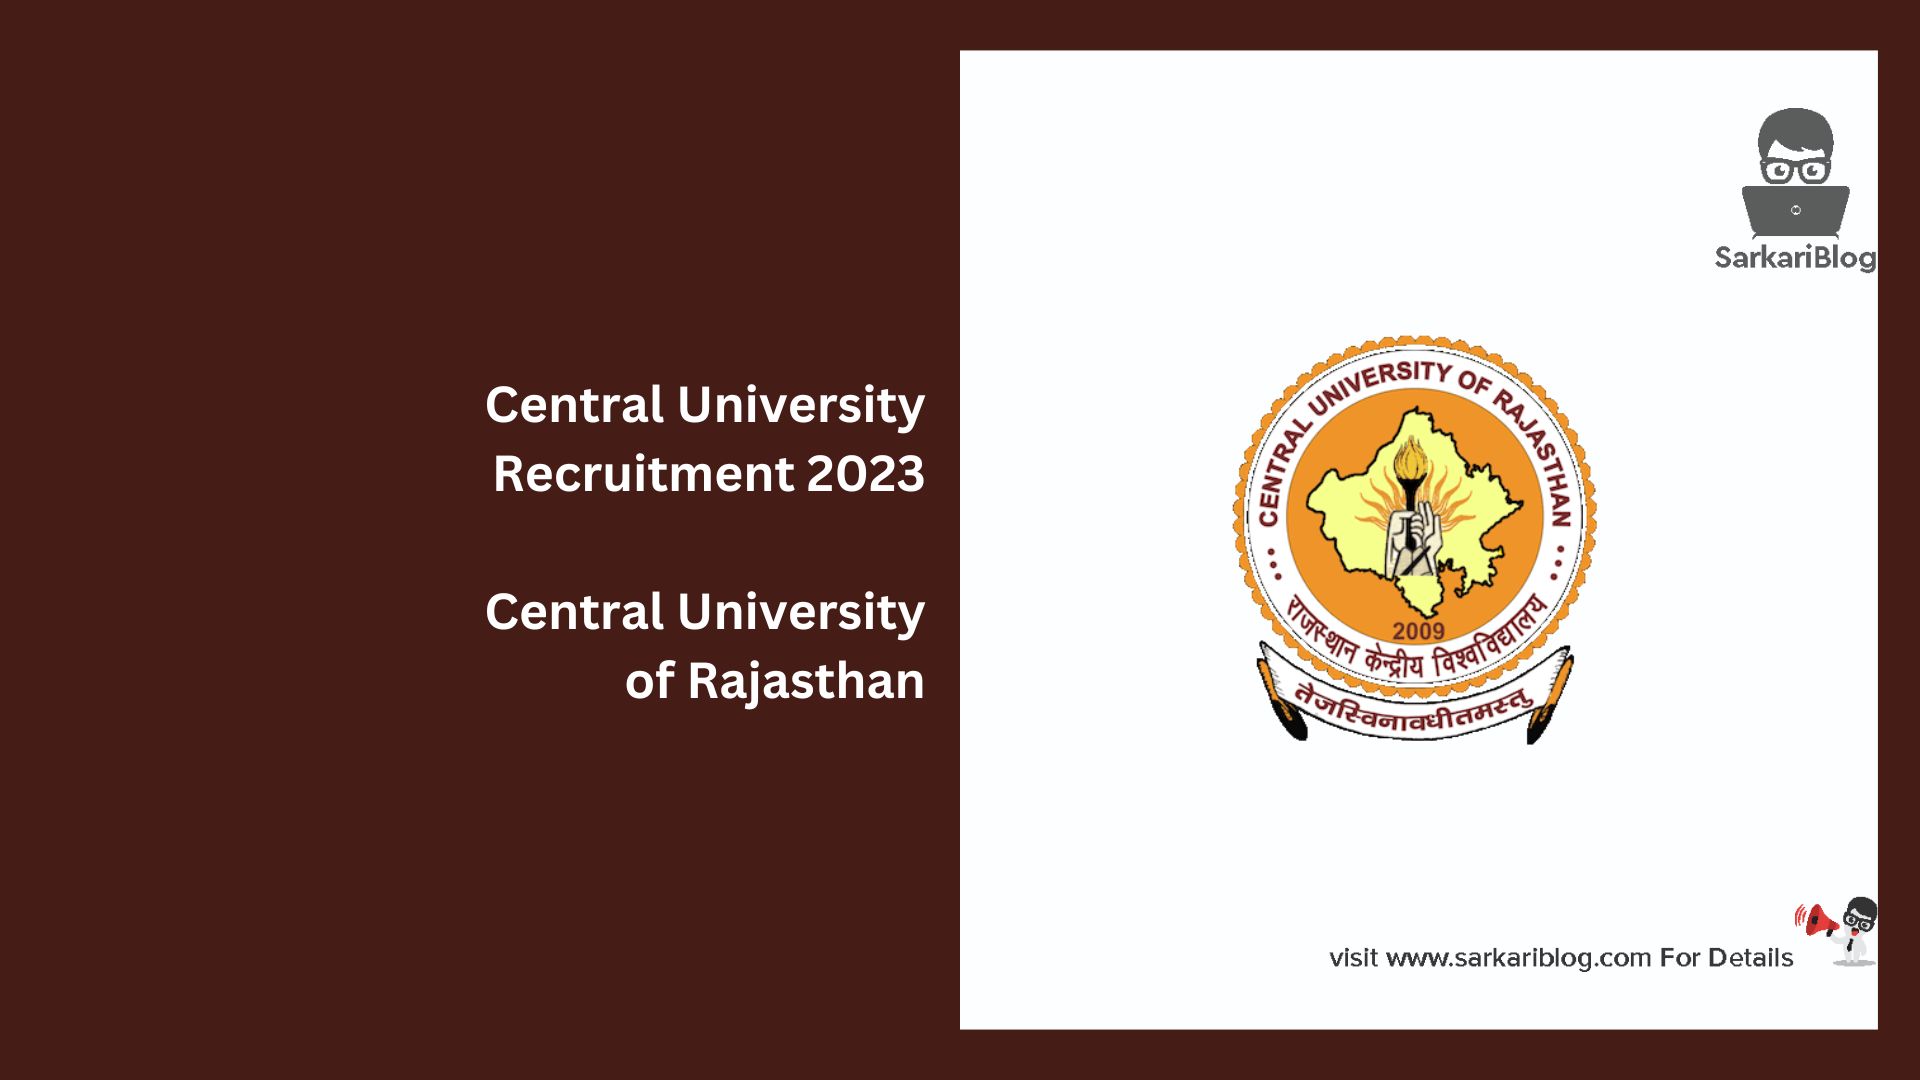 Central University Recruitment 2023